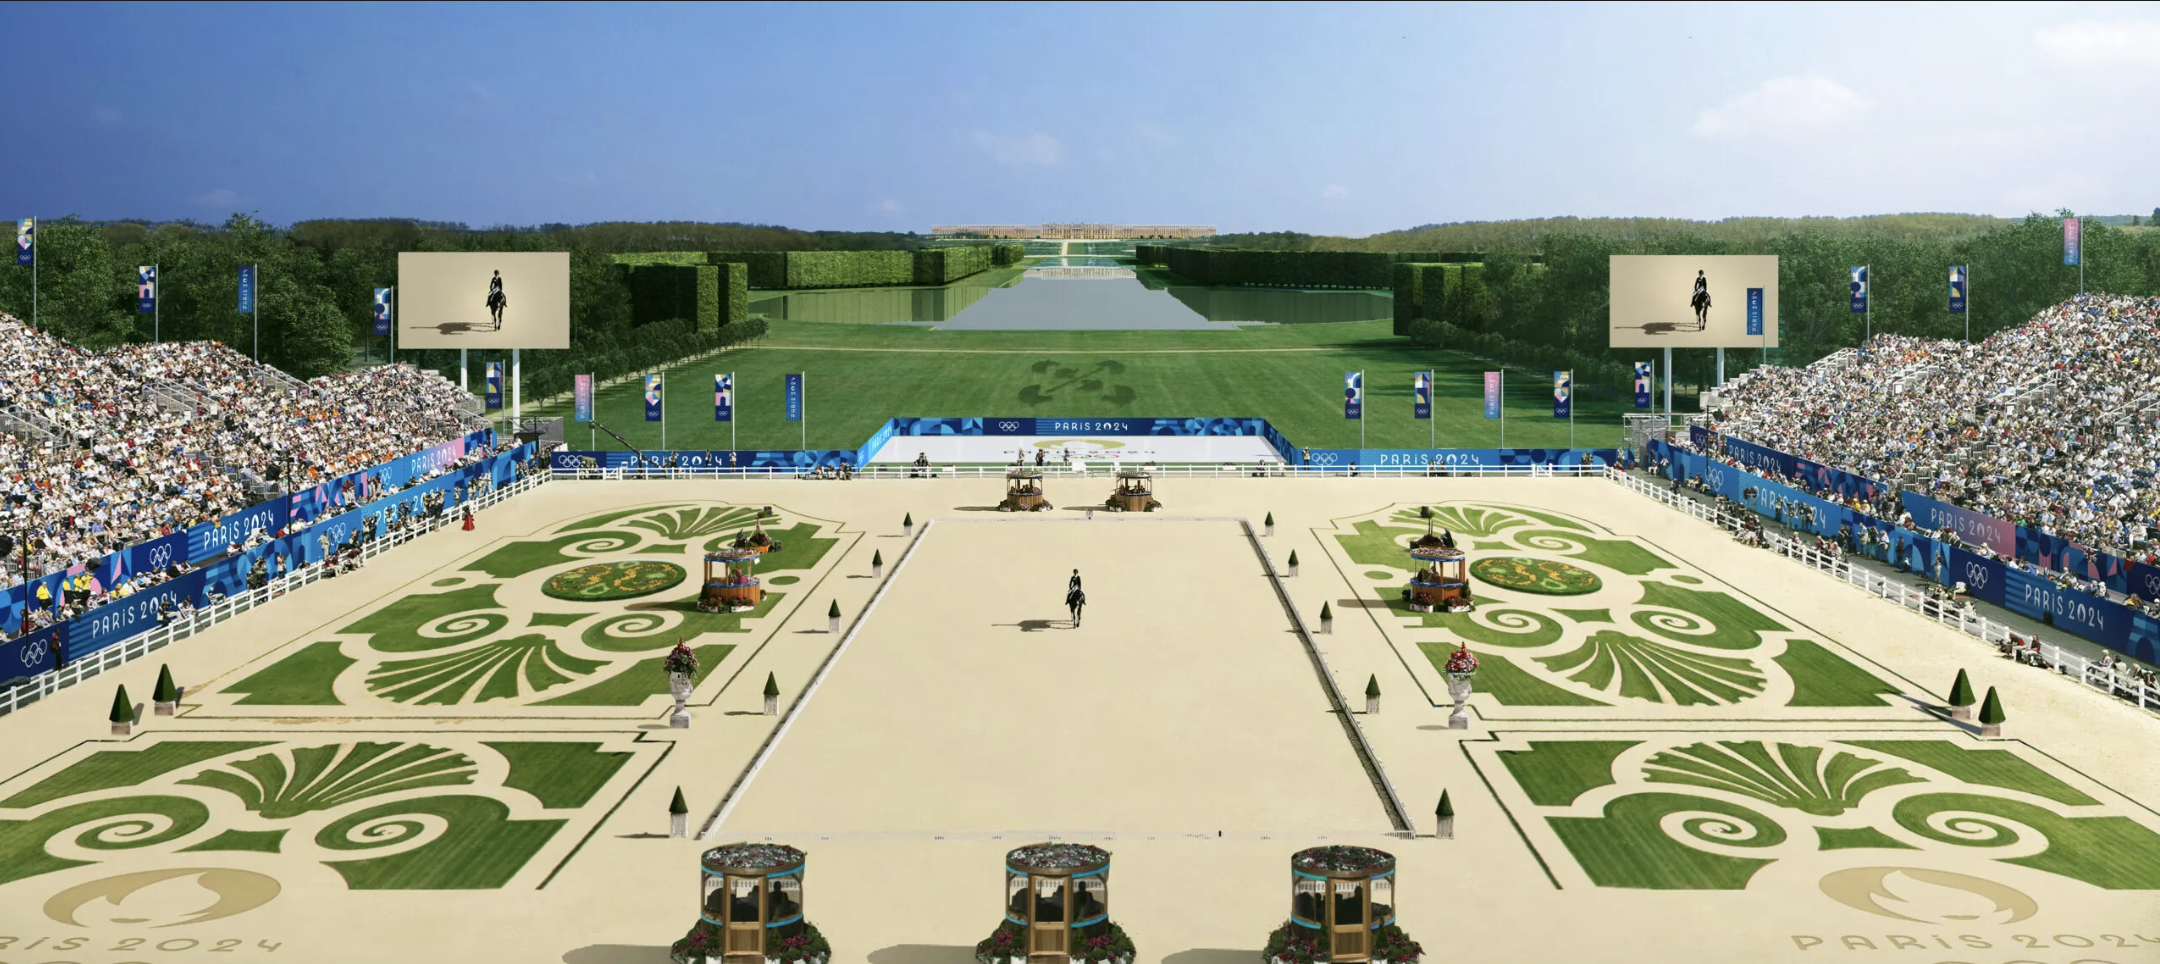 Epreuves equestres château de Versailles